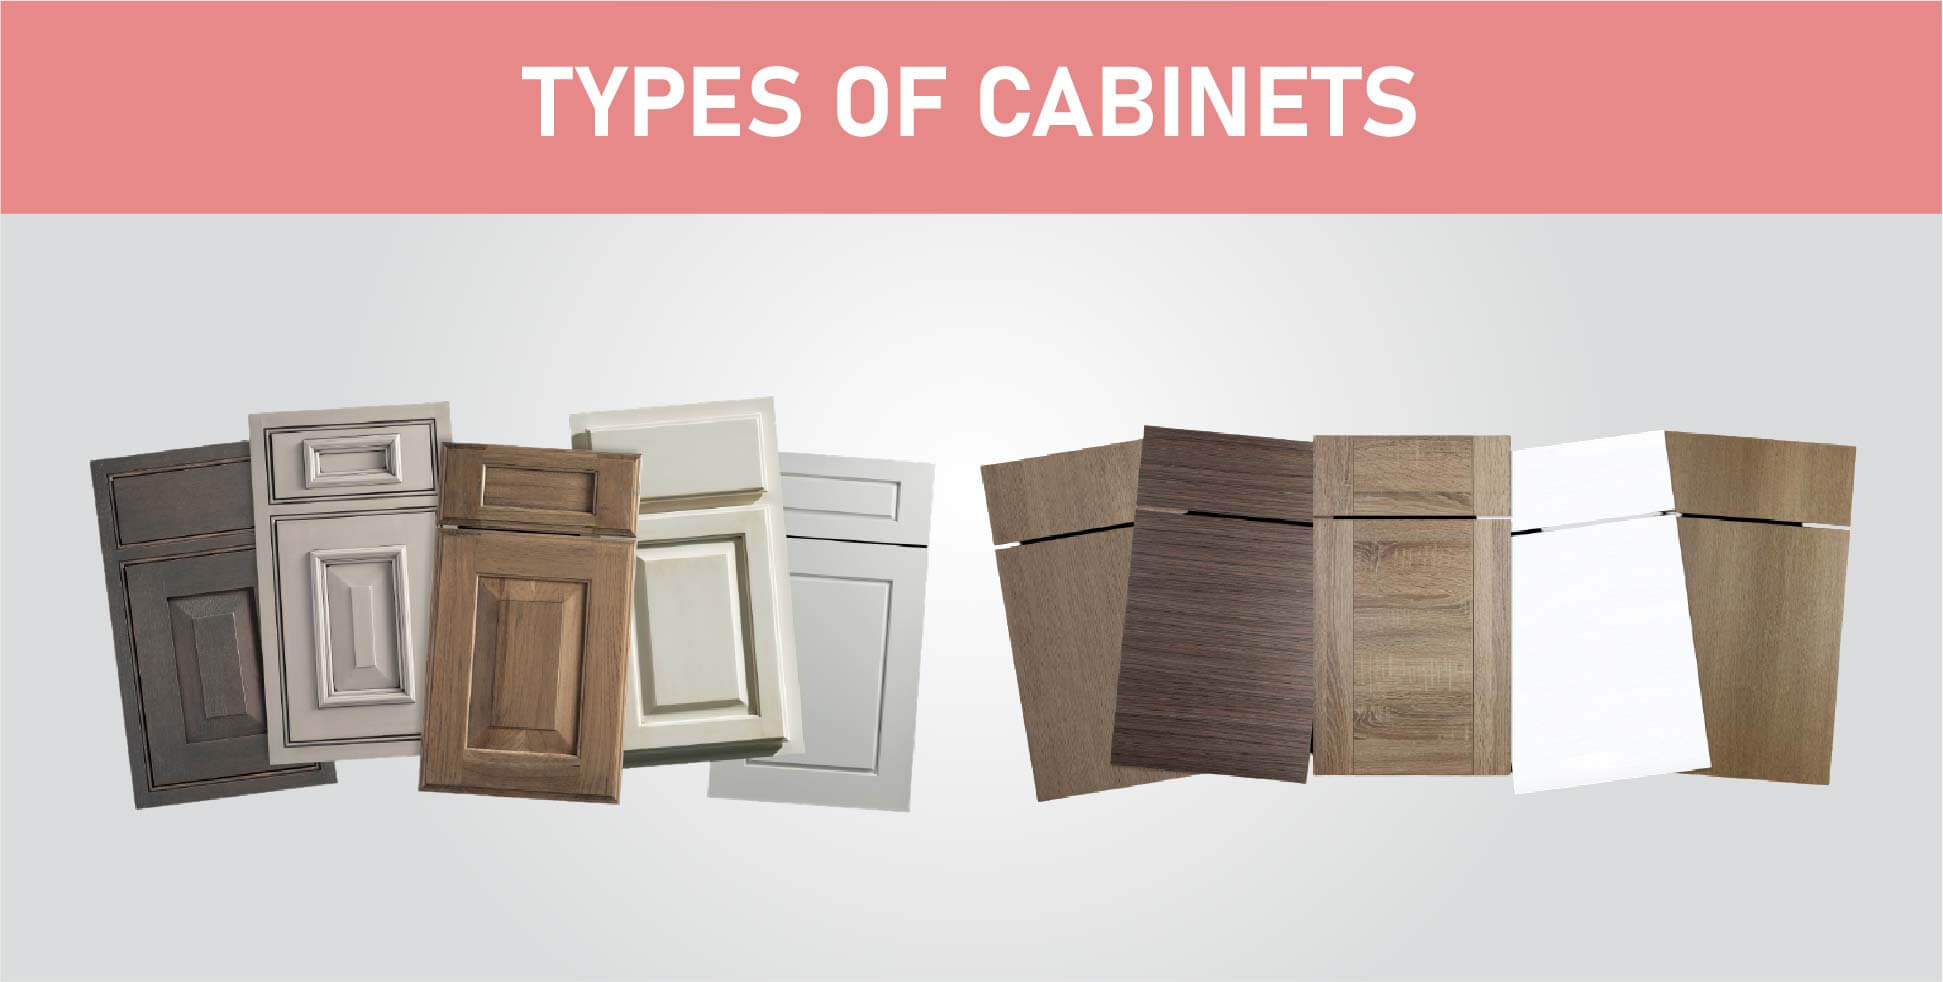 https://www.huntskitchendesigns.com/wp-content/uploads/2020/12/Hunts-Kitchen-Designs-Types-of-Cabinets.jpg